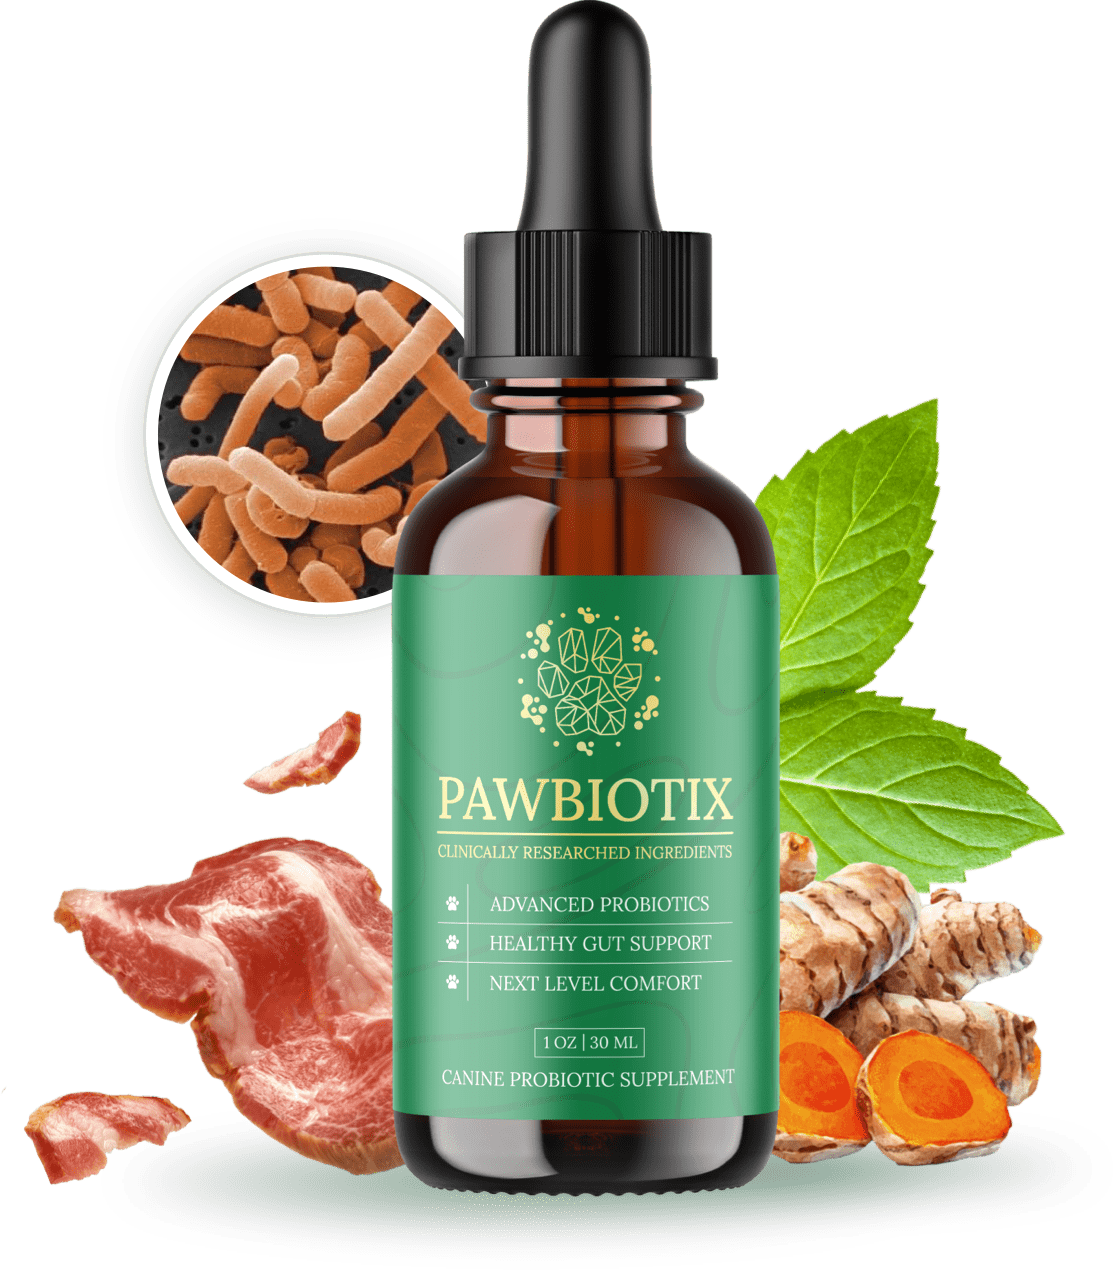 Pawbiotix Buy Official